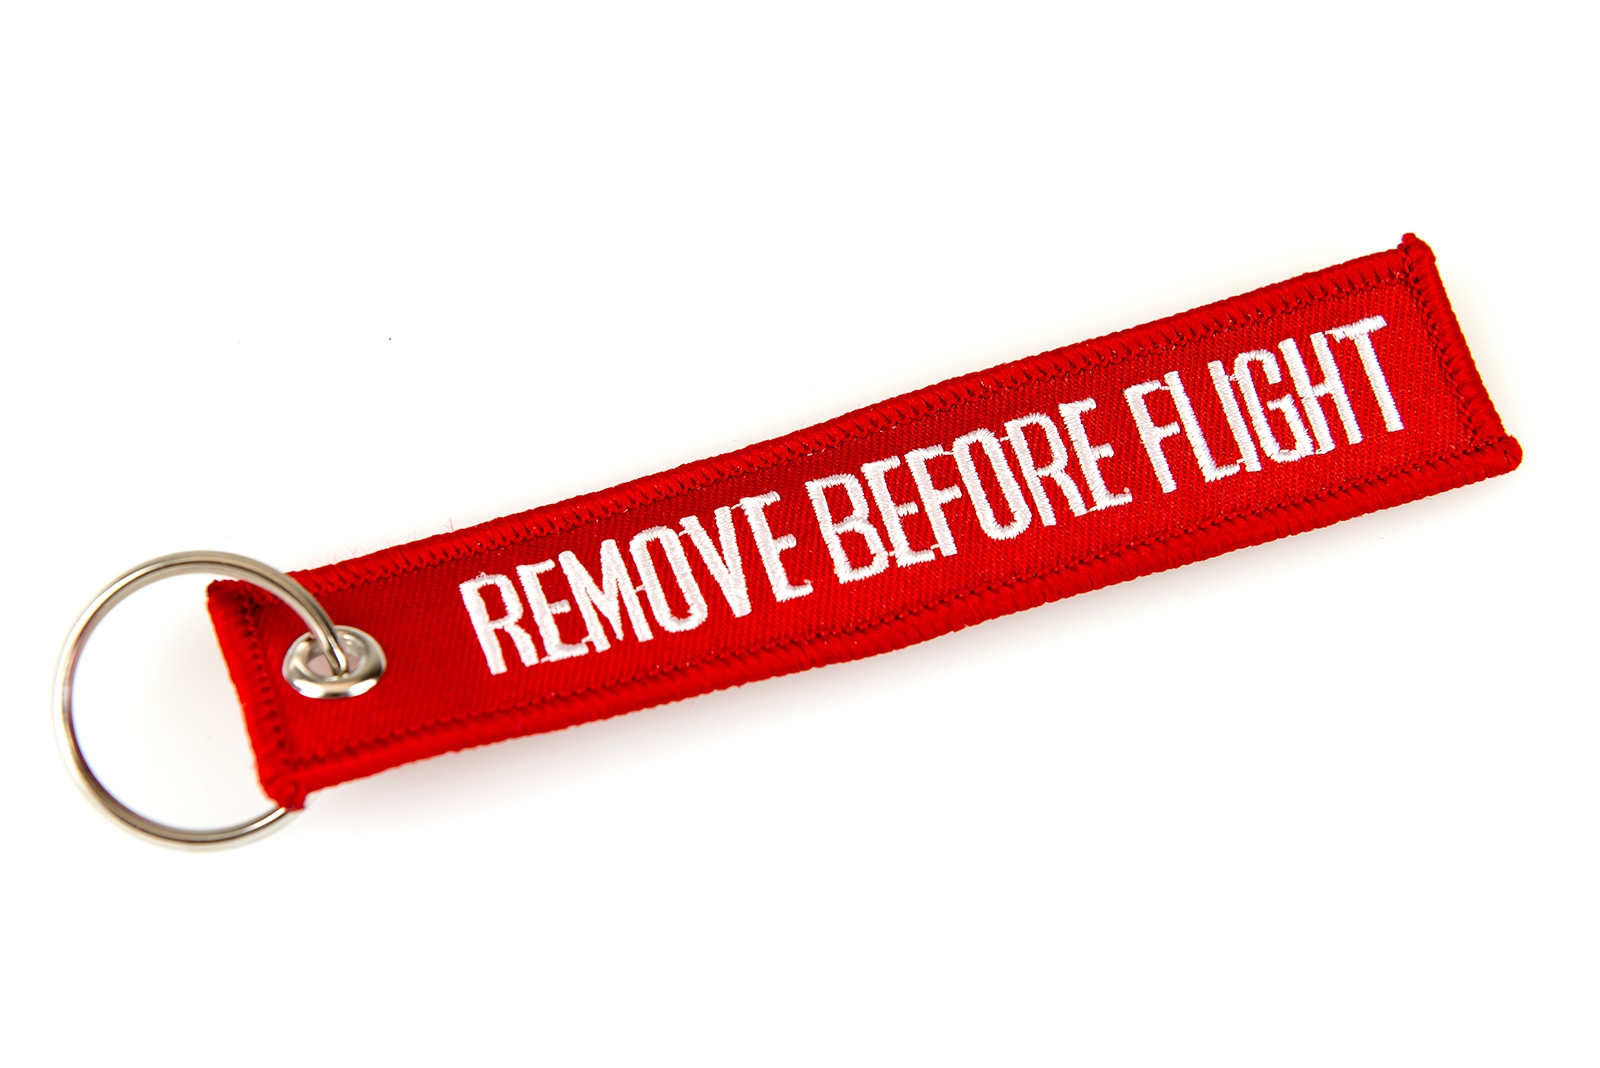 Remove before flight label